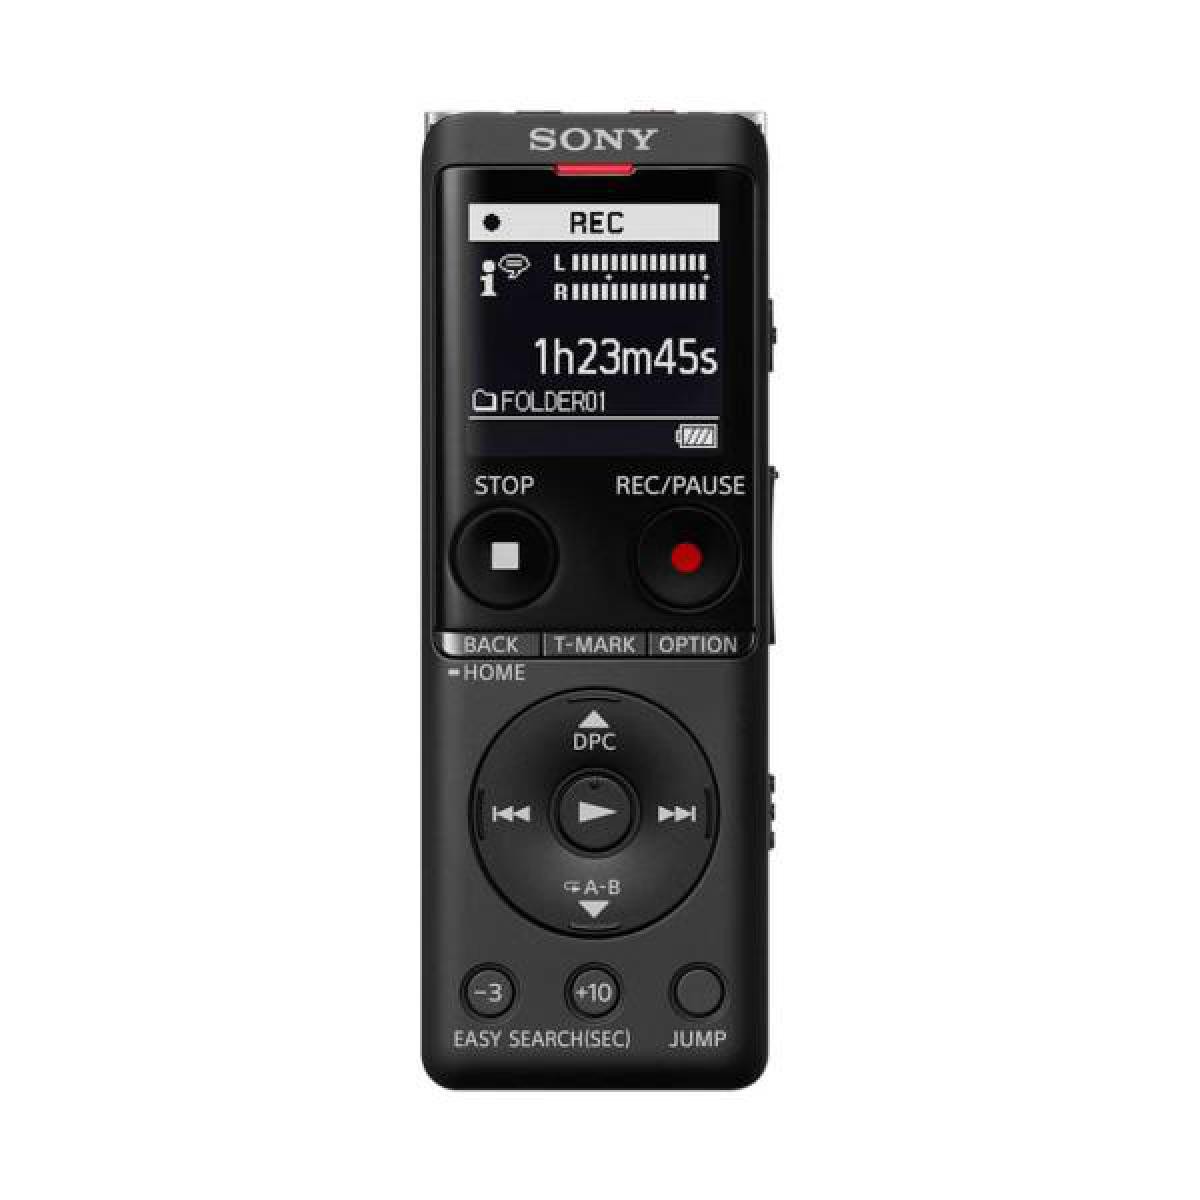 Sony - Sony Icdux570 Negra Grabadora De Voz Digital Oled 4gb Pcm Mp3 + Bolsa De Transporte - Drone connecté